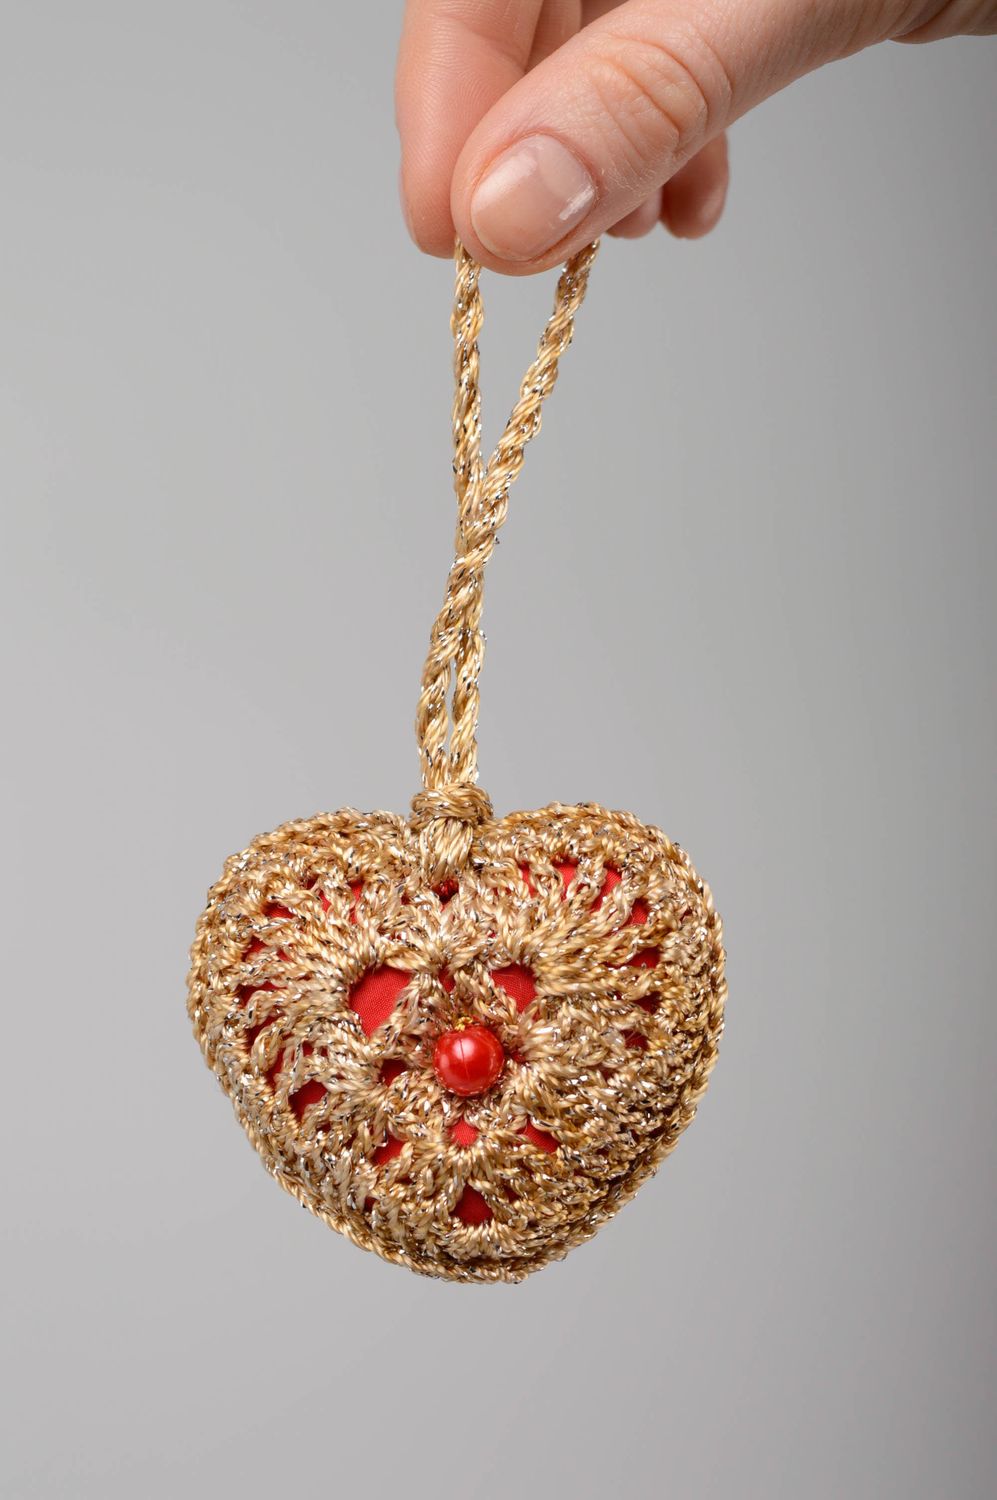 Crochet interior pendant in the shape of heart photo 4